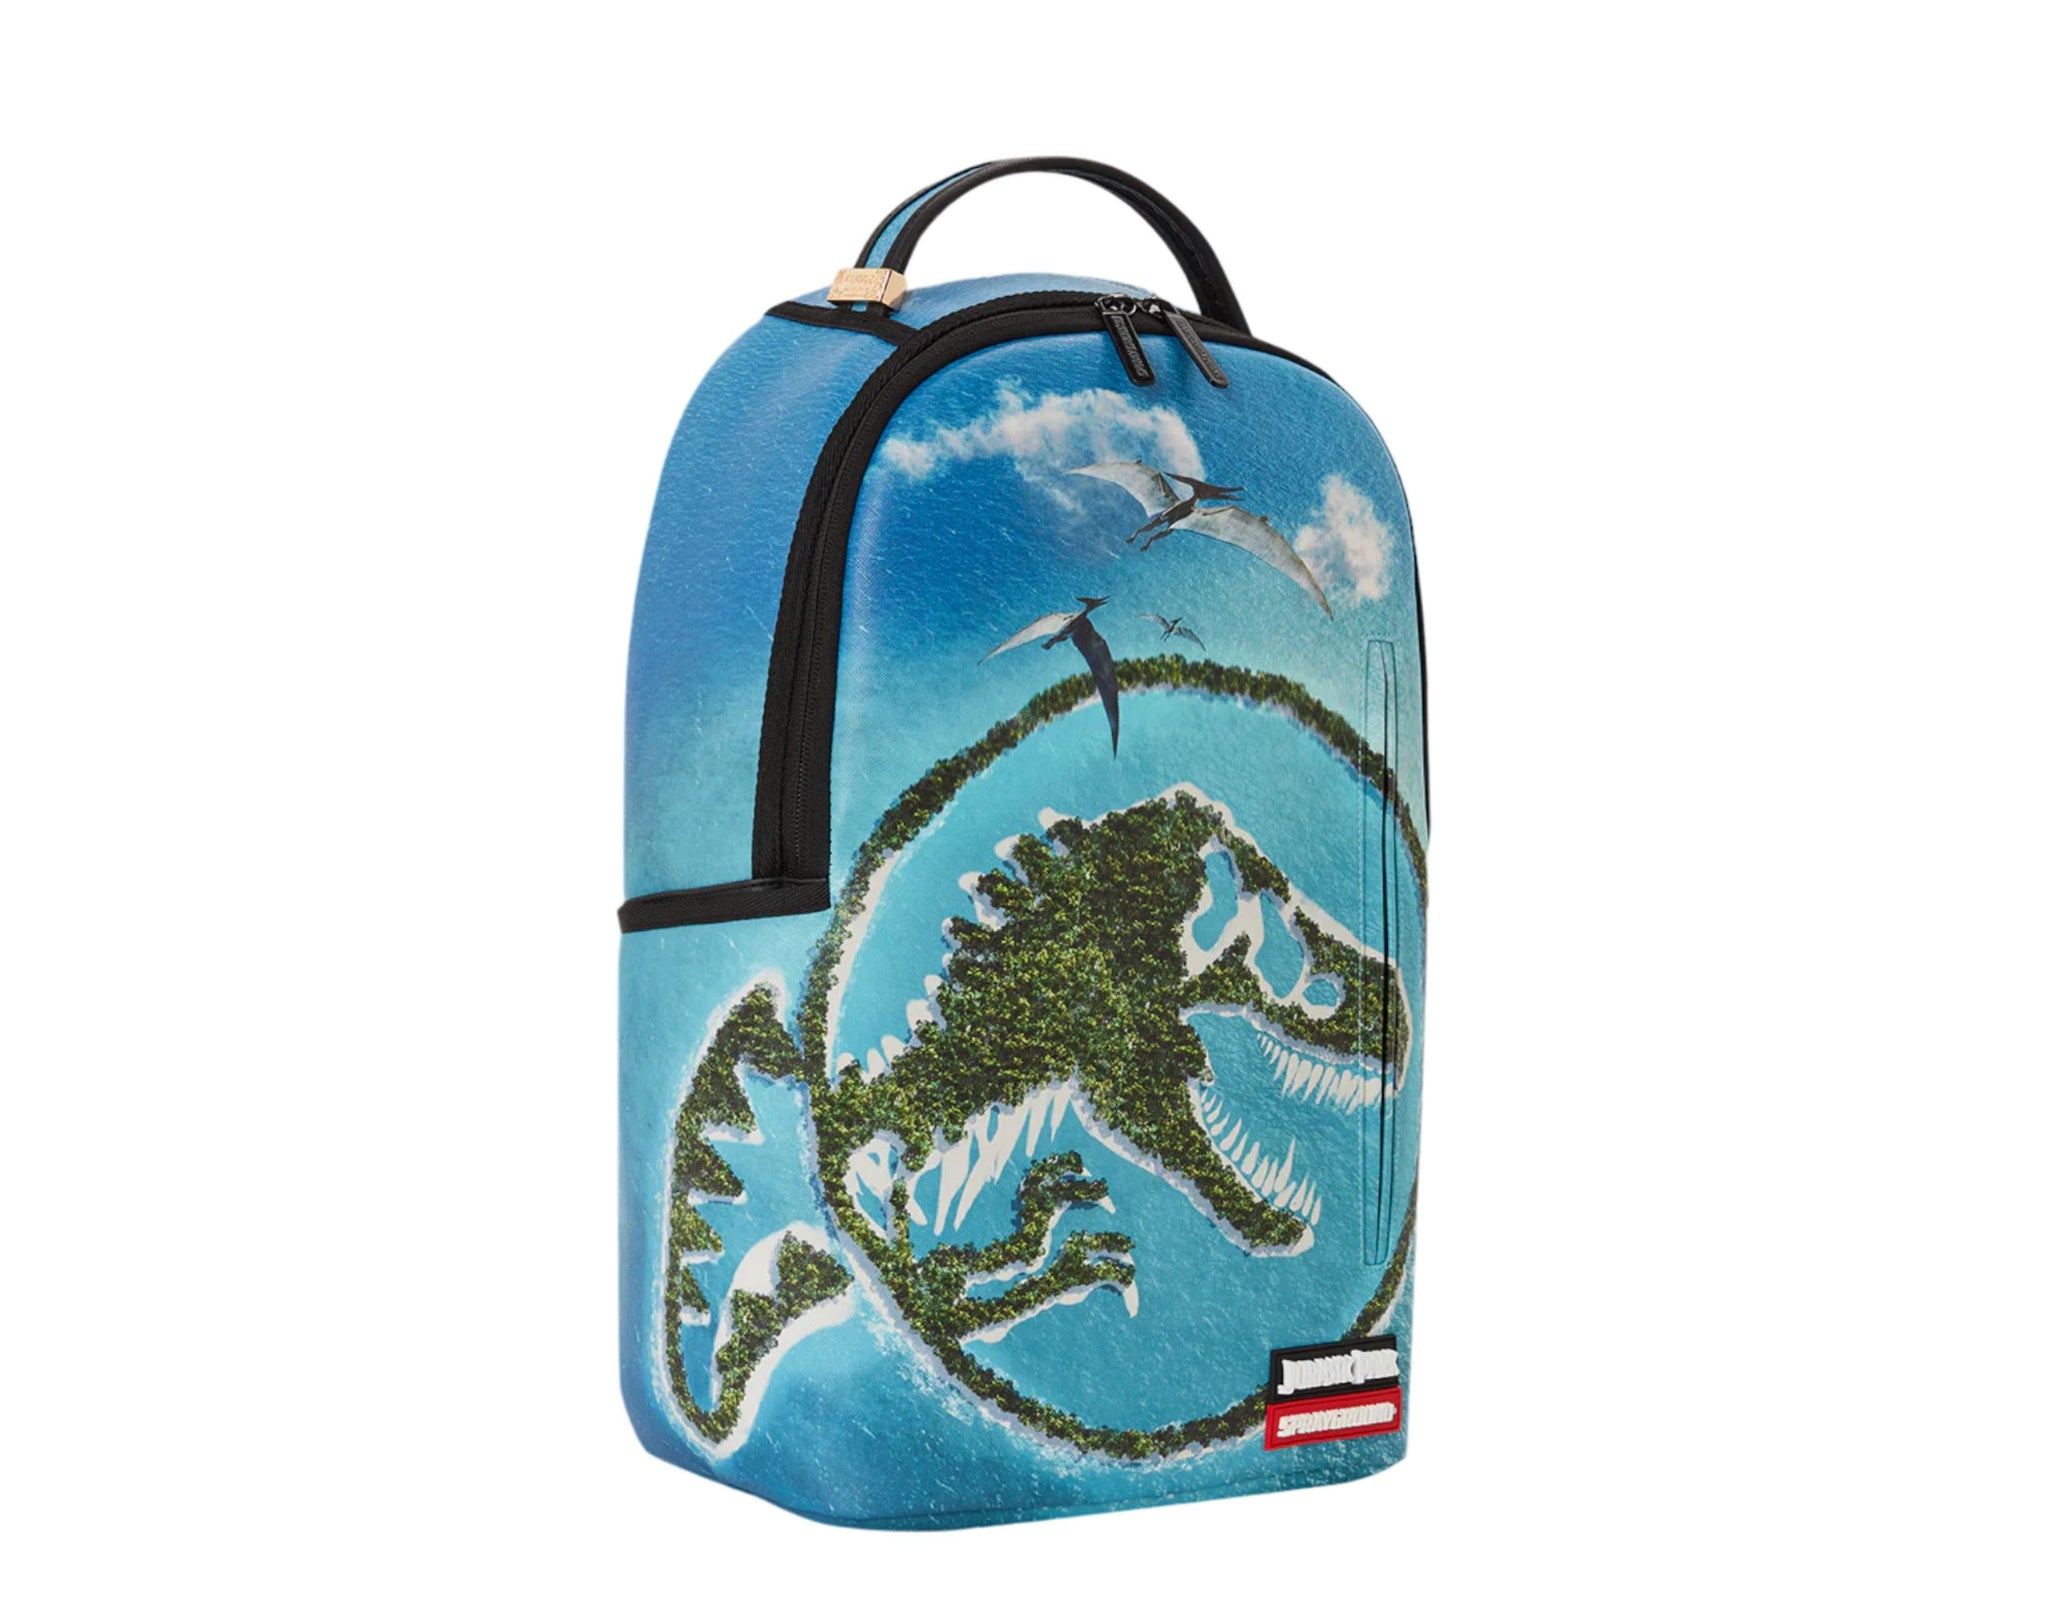 Sprayground Unisex Jurassic Island DLXSV Backpack 910B5477NSZ Blue/Green